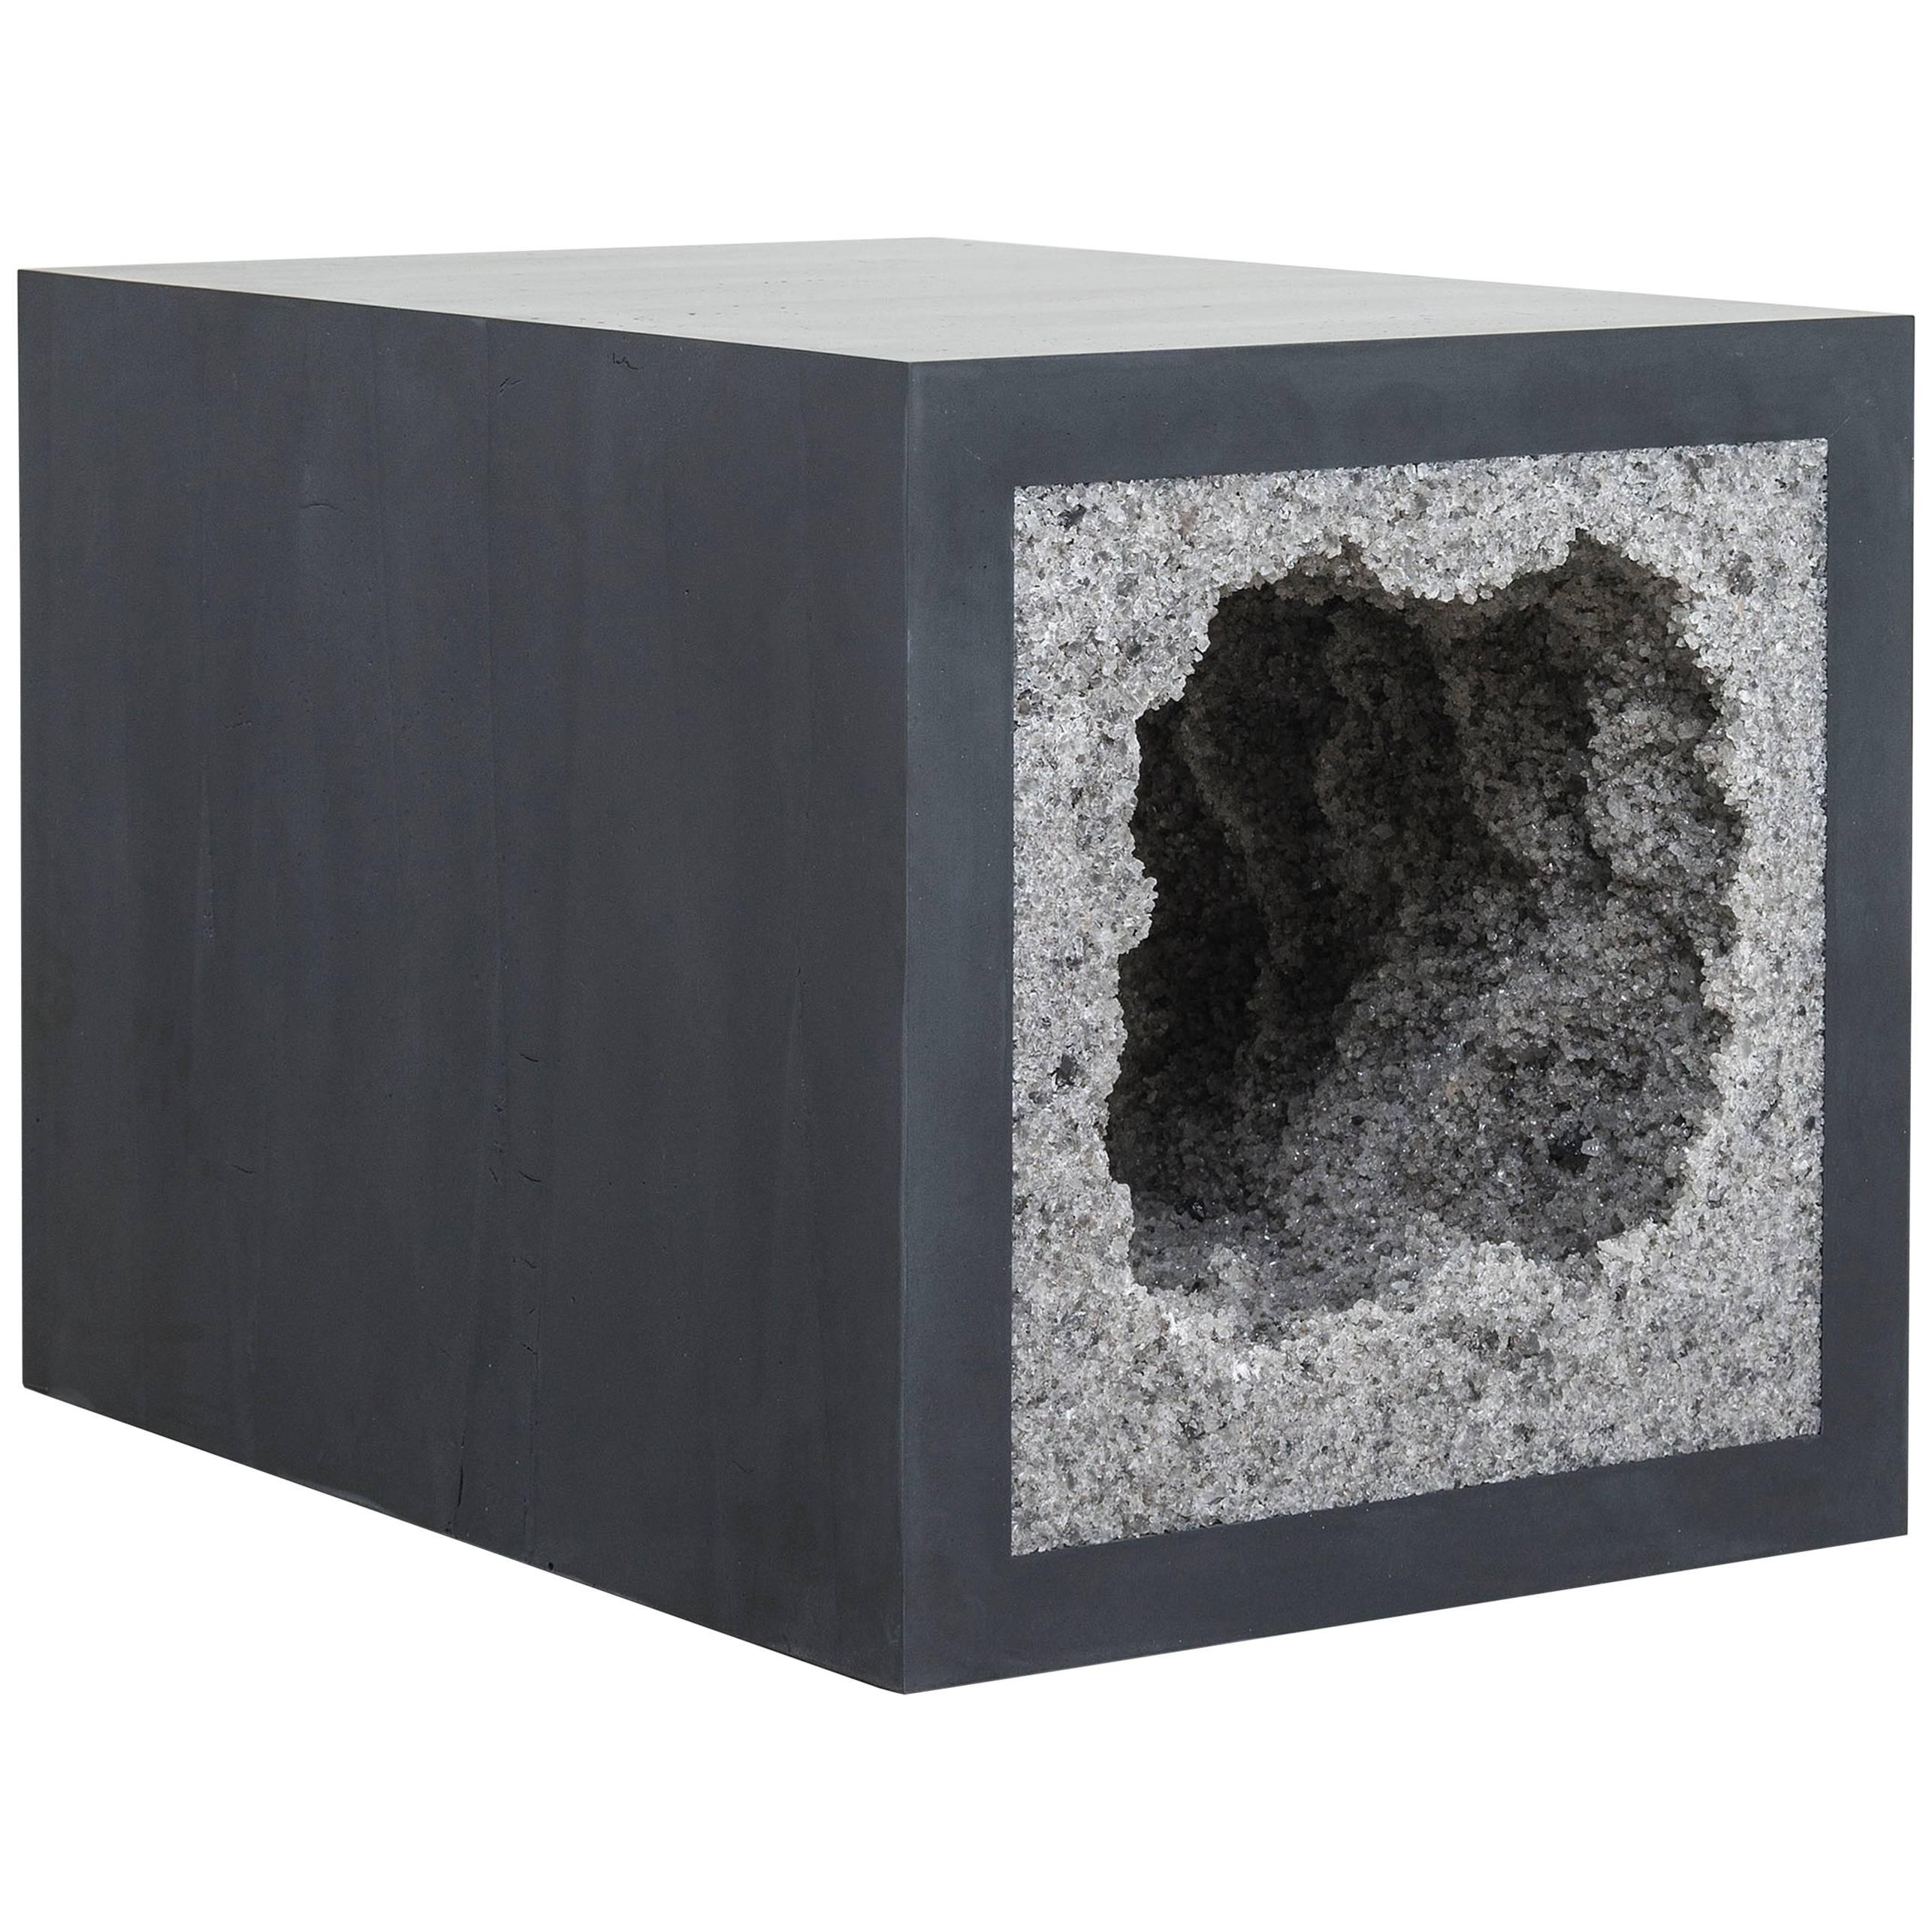 Strata 4 Side Table, Black Cement and Grey Rock Salt by Fernando Mastrangelo